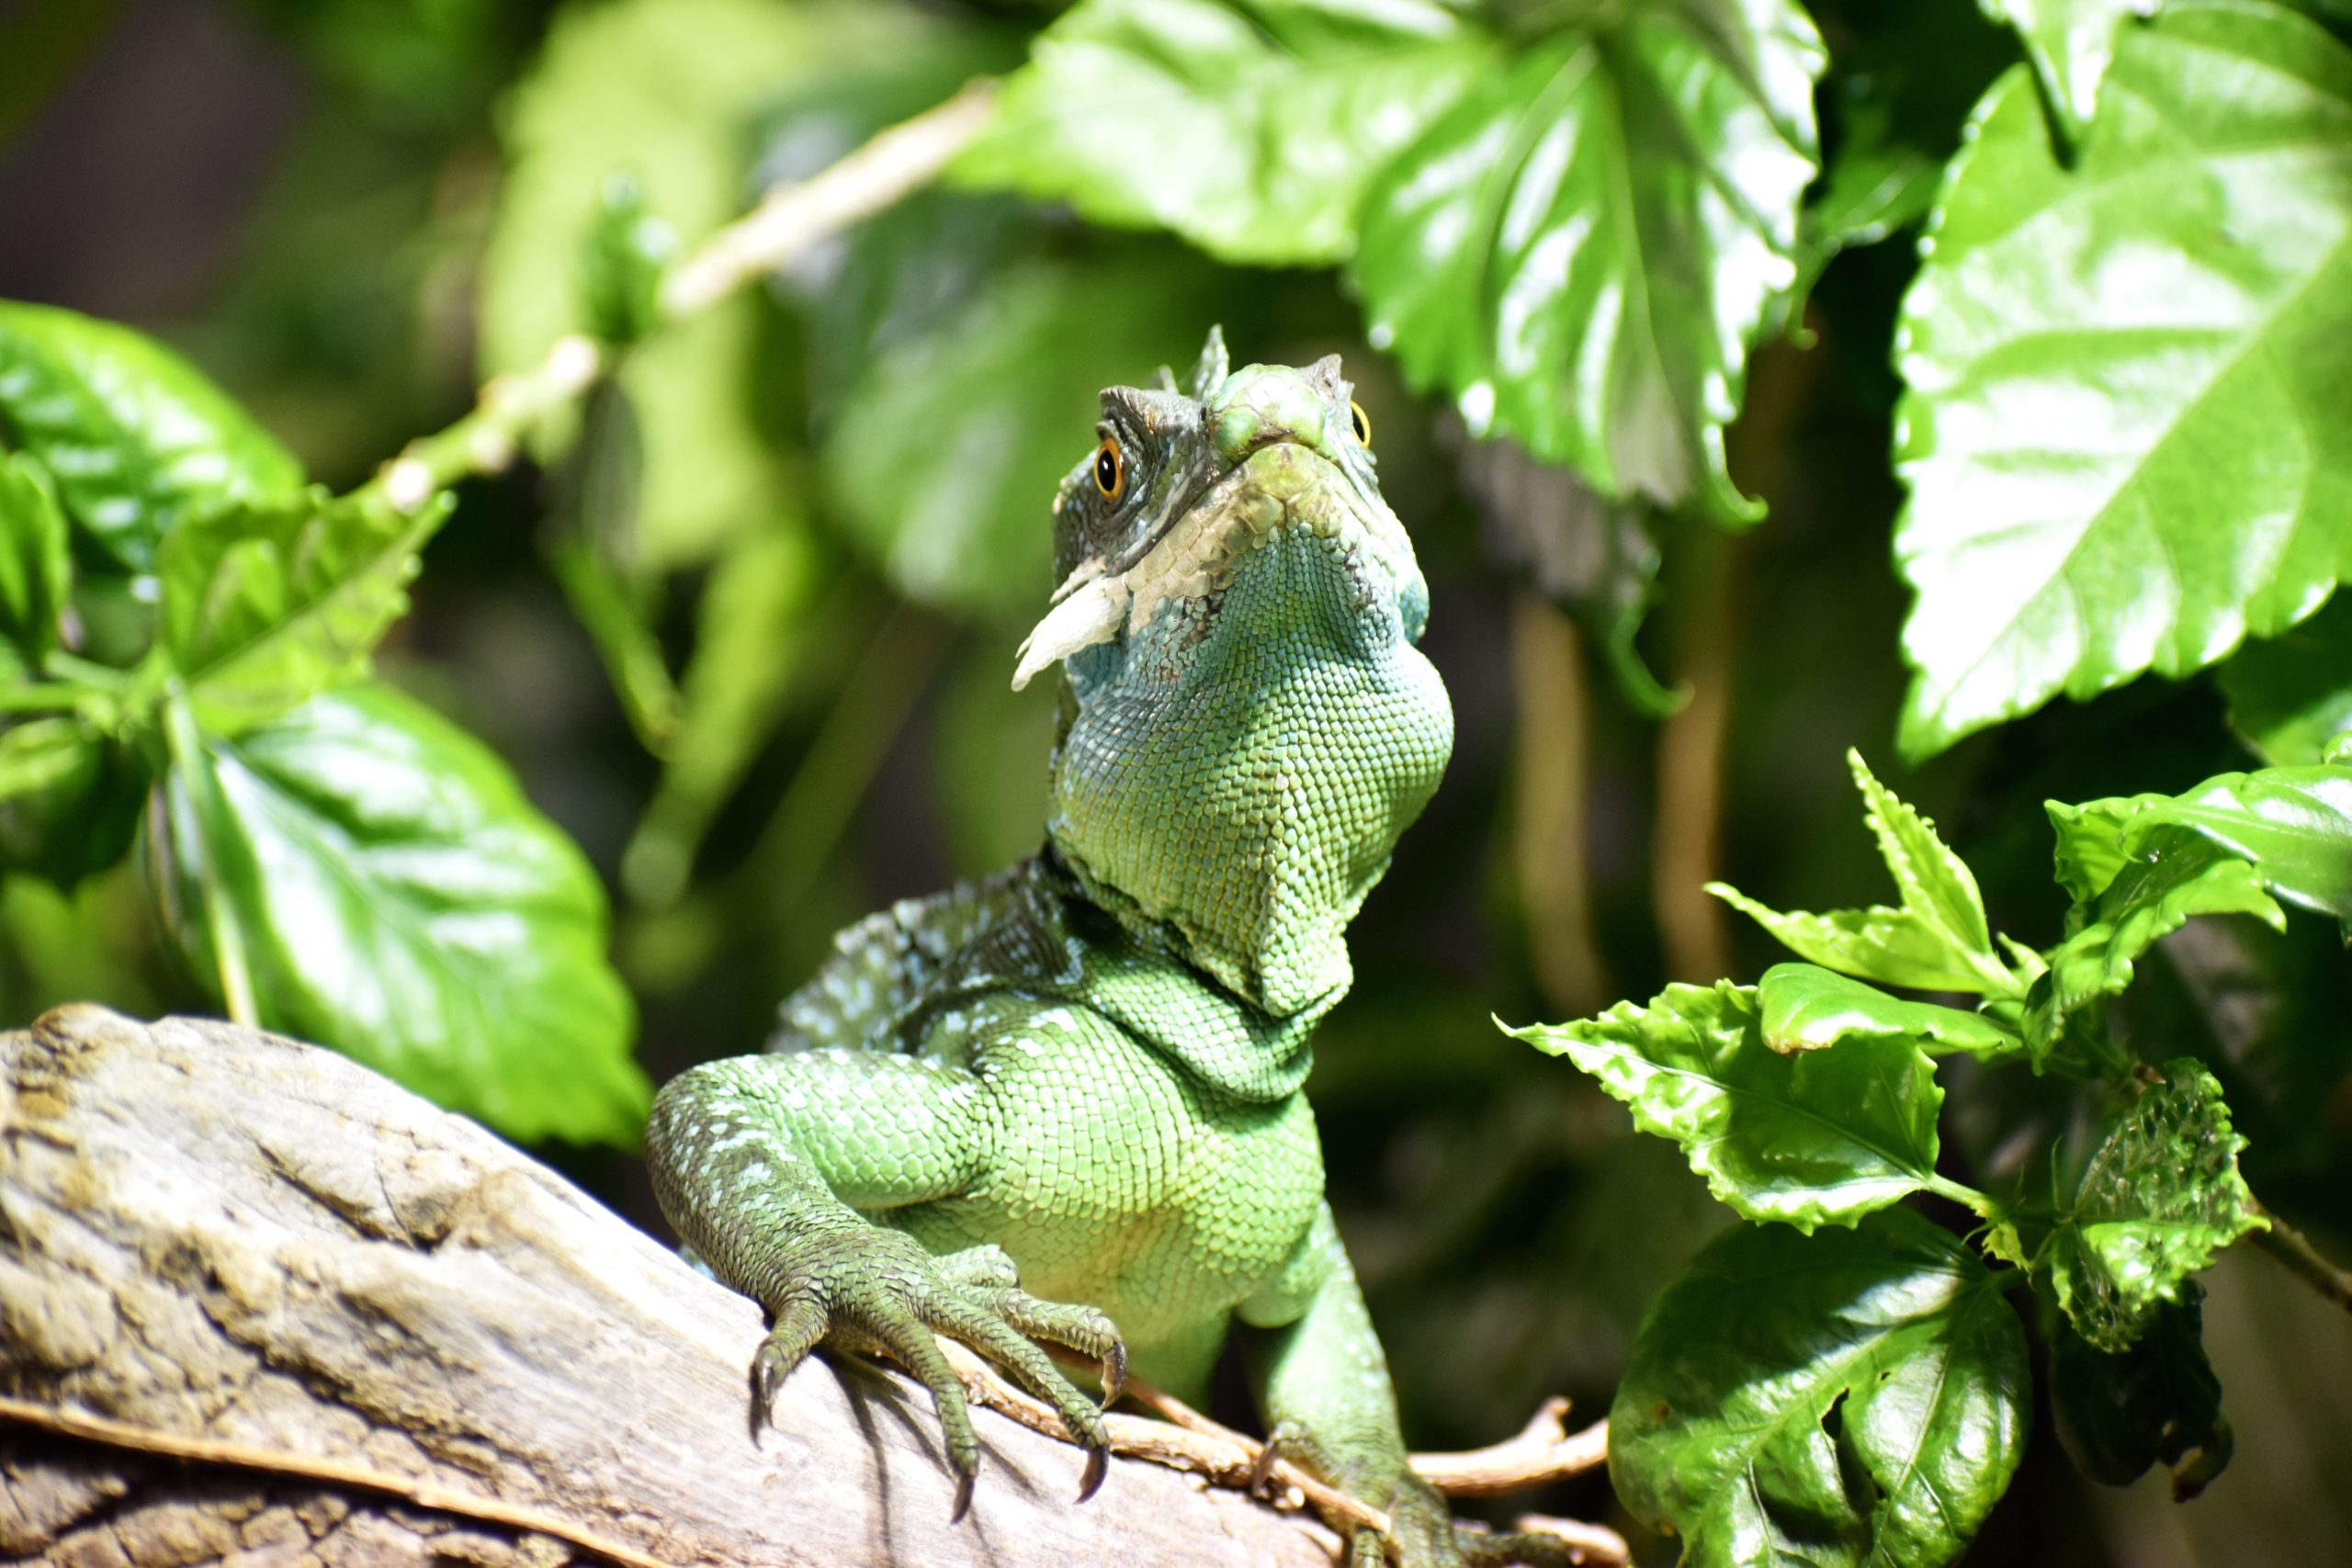 Lizard inside reptile terrarium